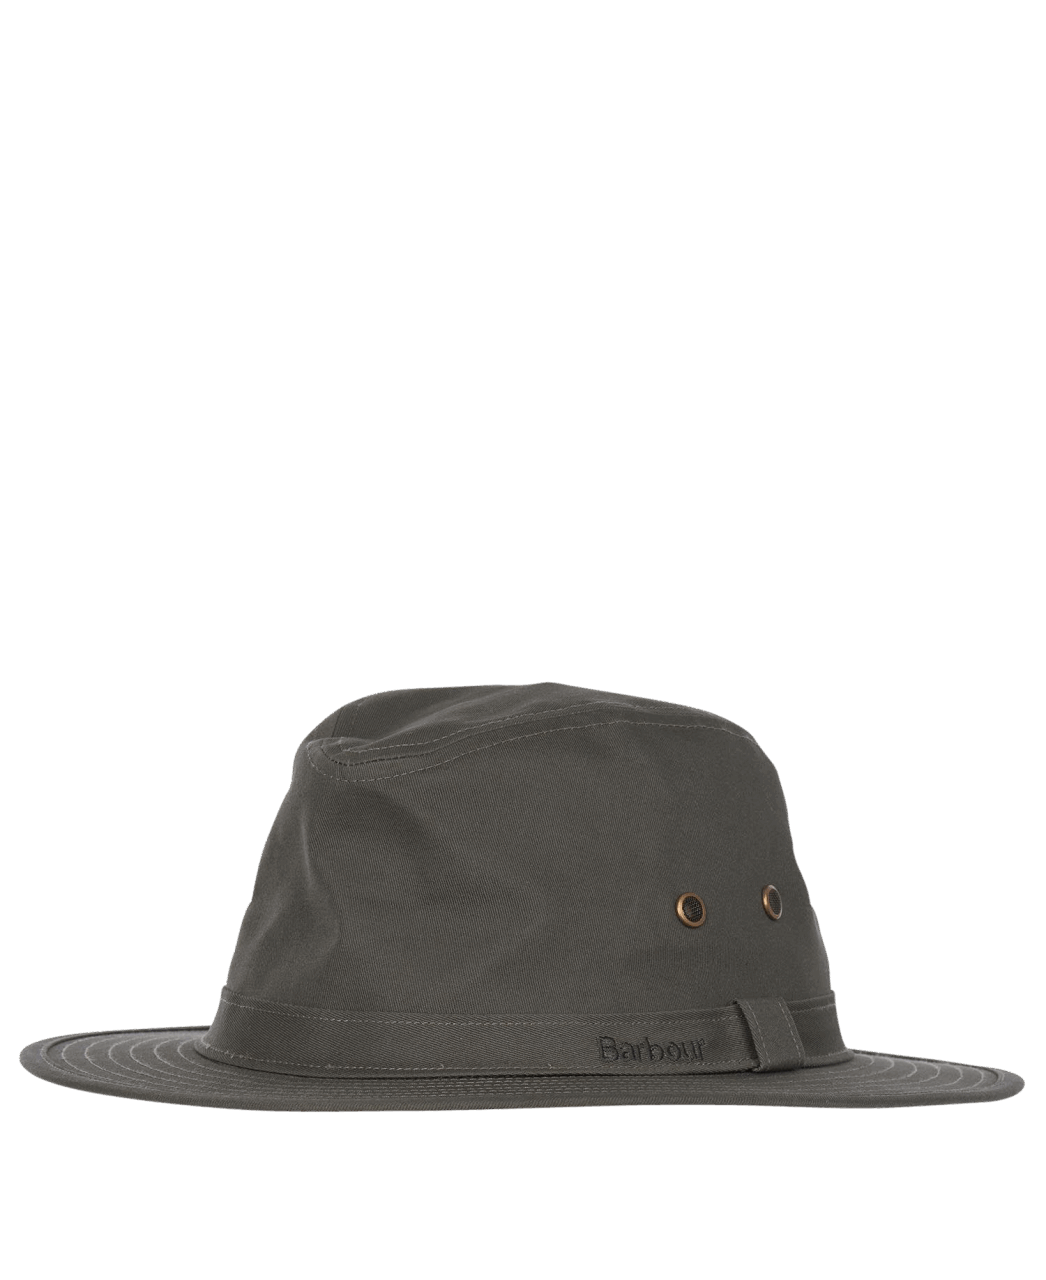 Barbour Dawson Safari Hat - olive